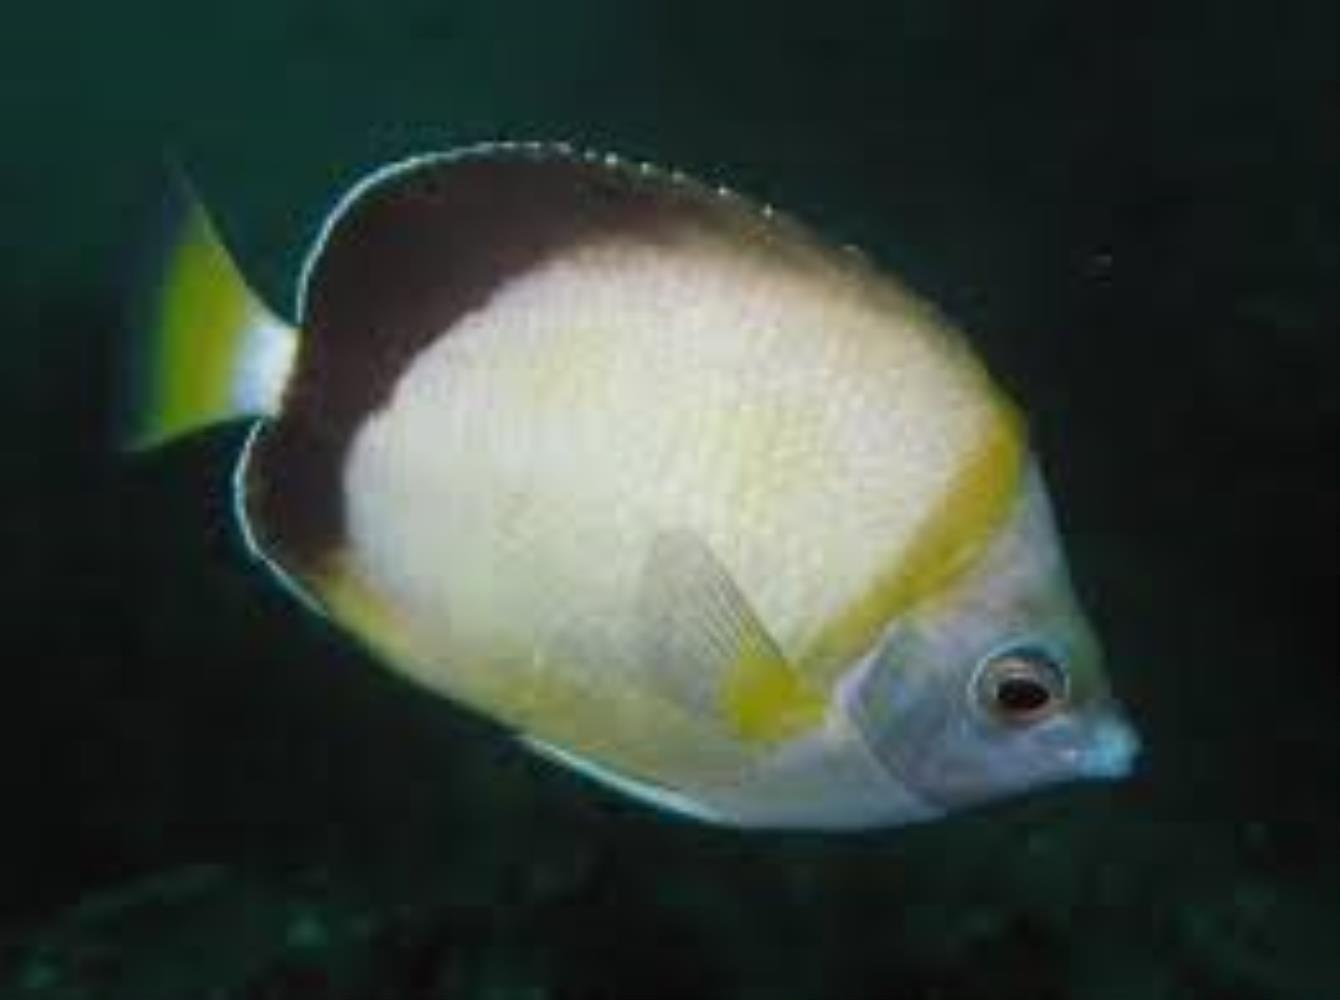 Japanese Butteflyfish